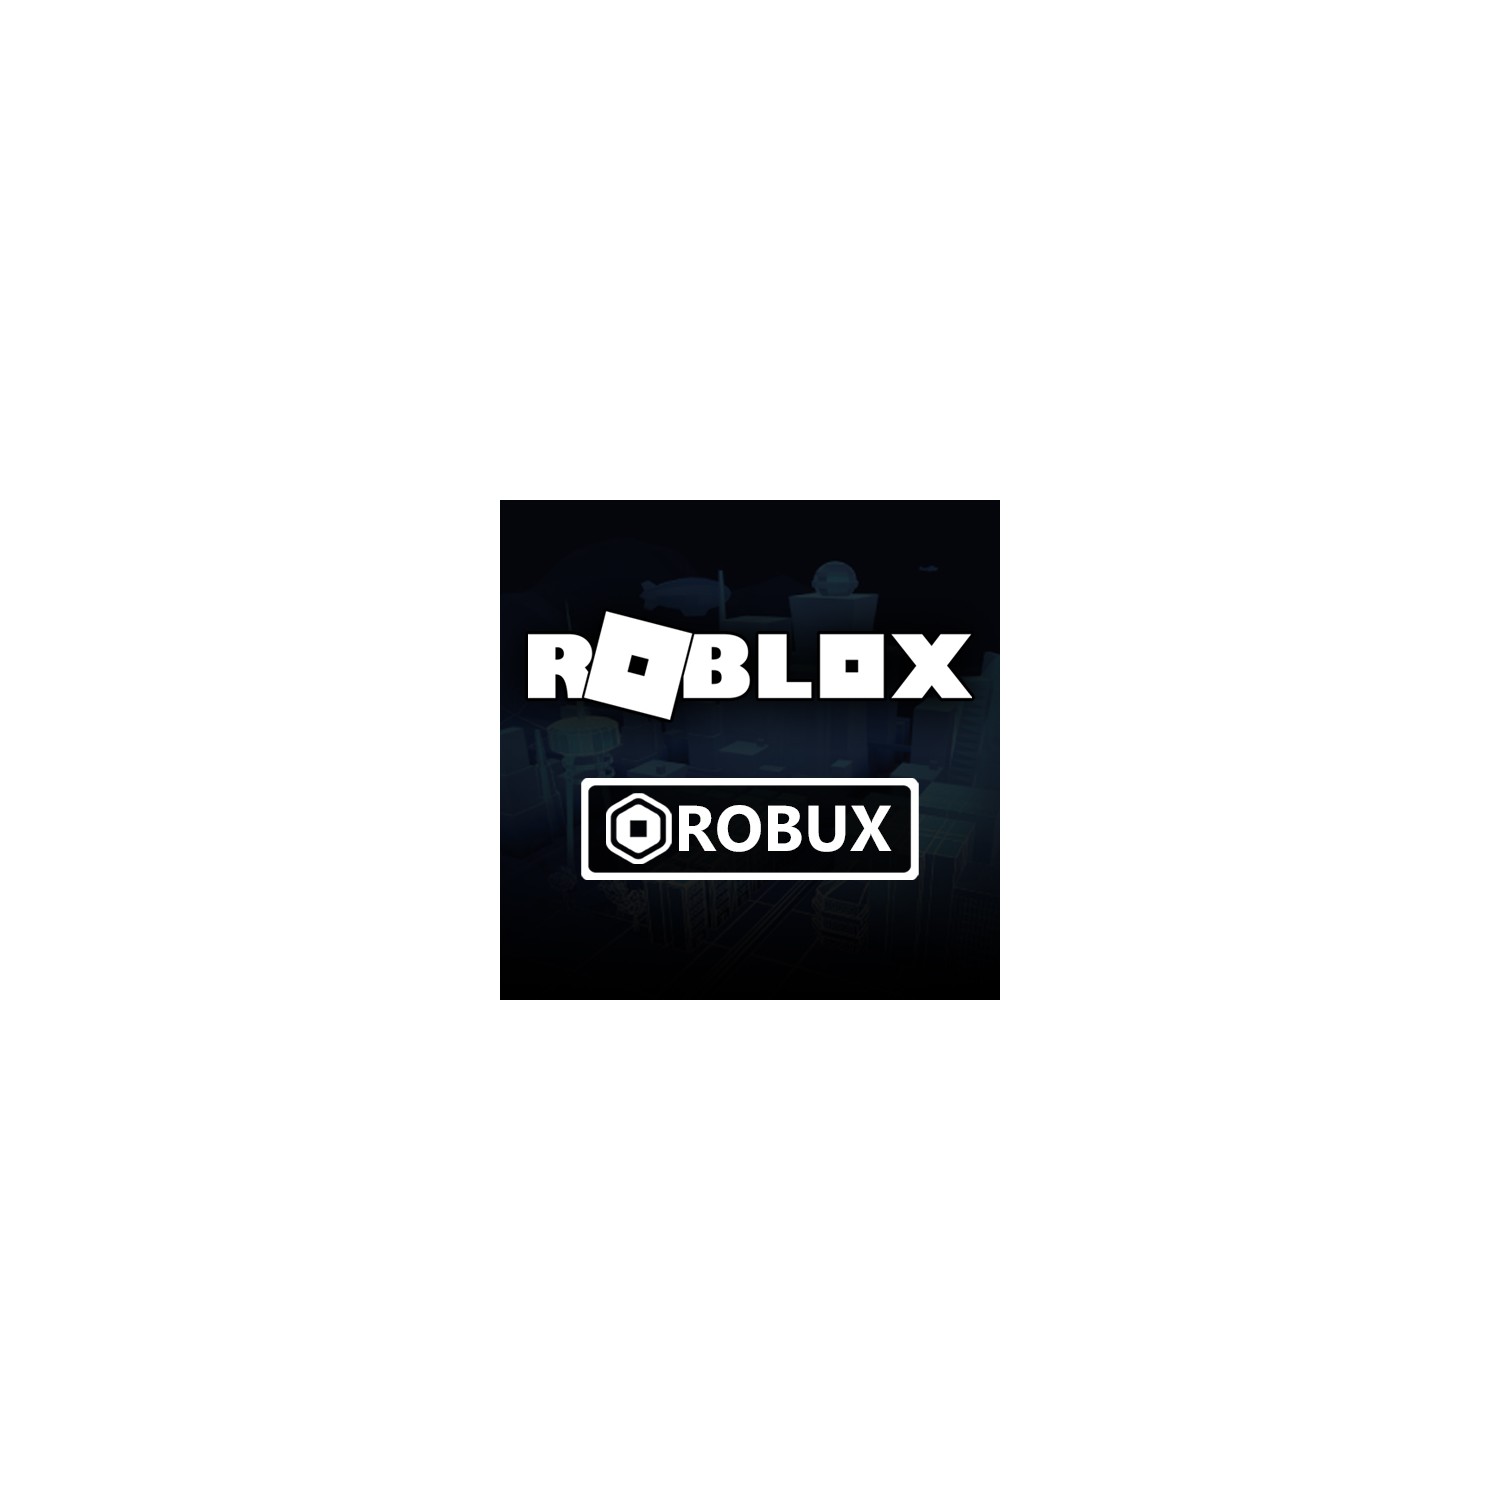 Roblox 800 Robux Fiyati Taksit Secenekleri Ile Satin Al - ucuza robux alma sitesi